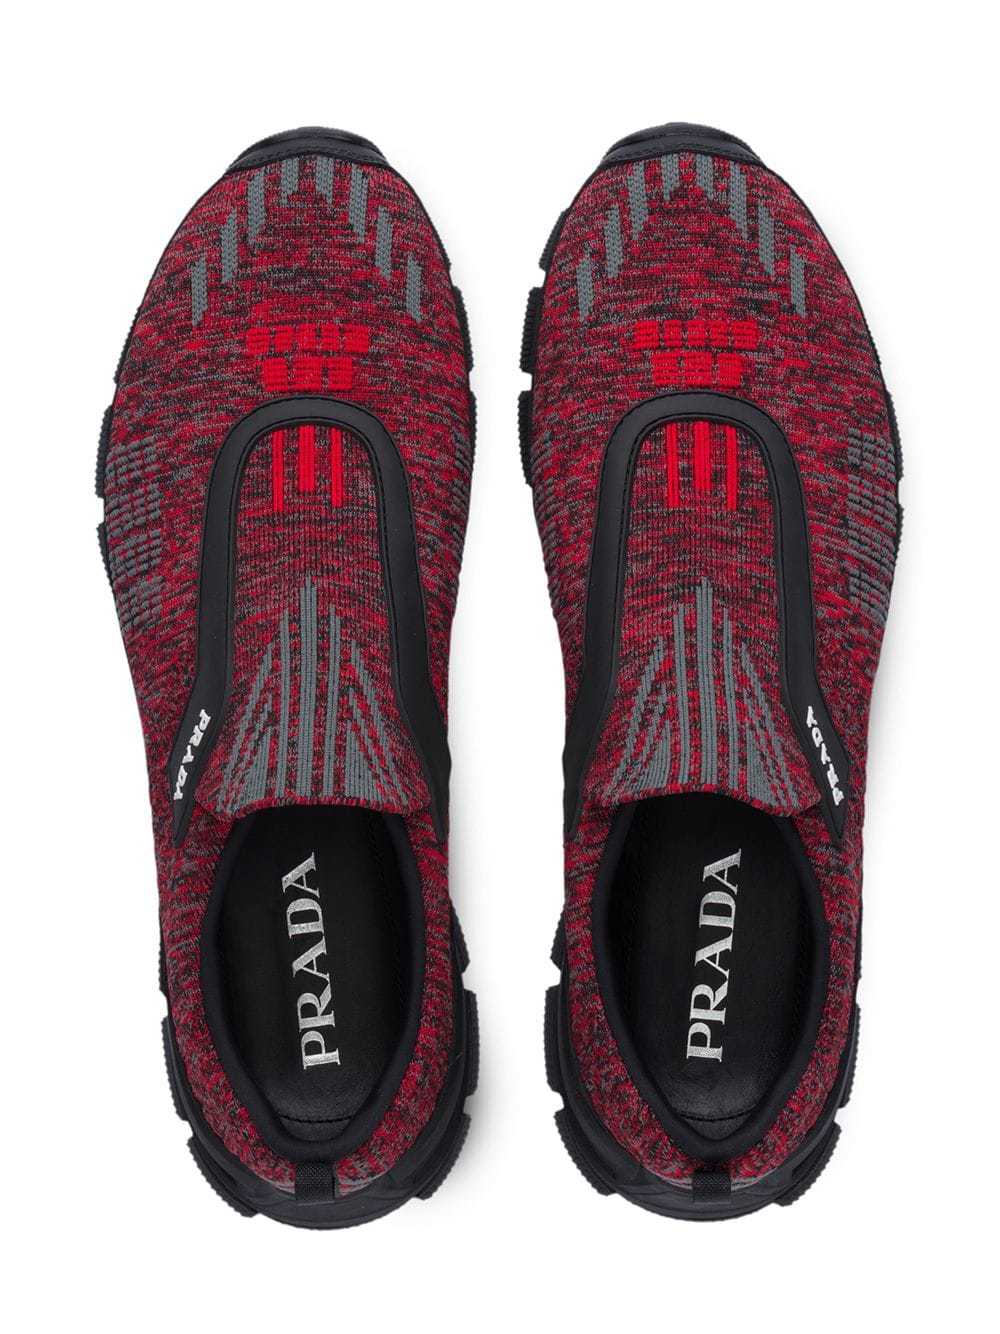 Prada Crossection Knit Sneakers, $559 